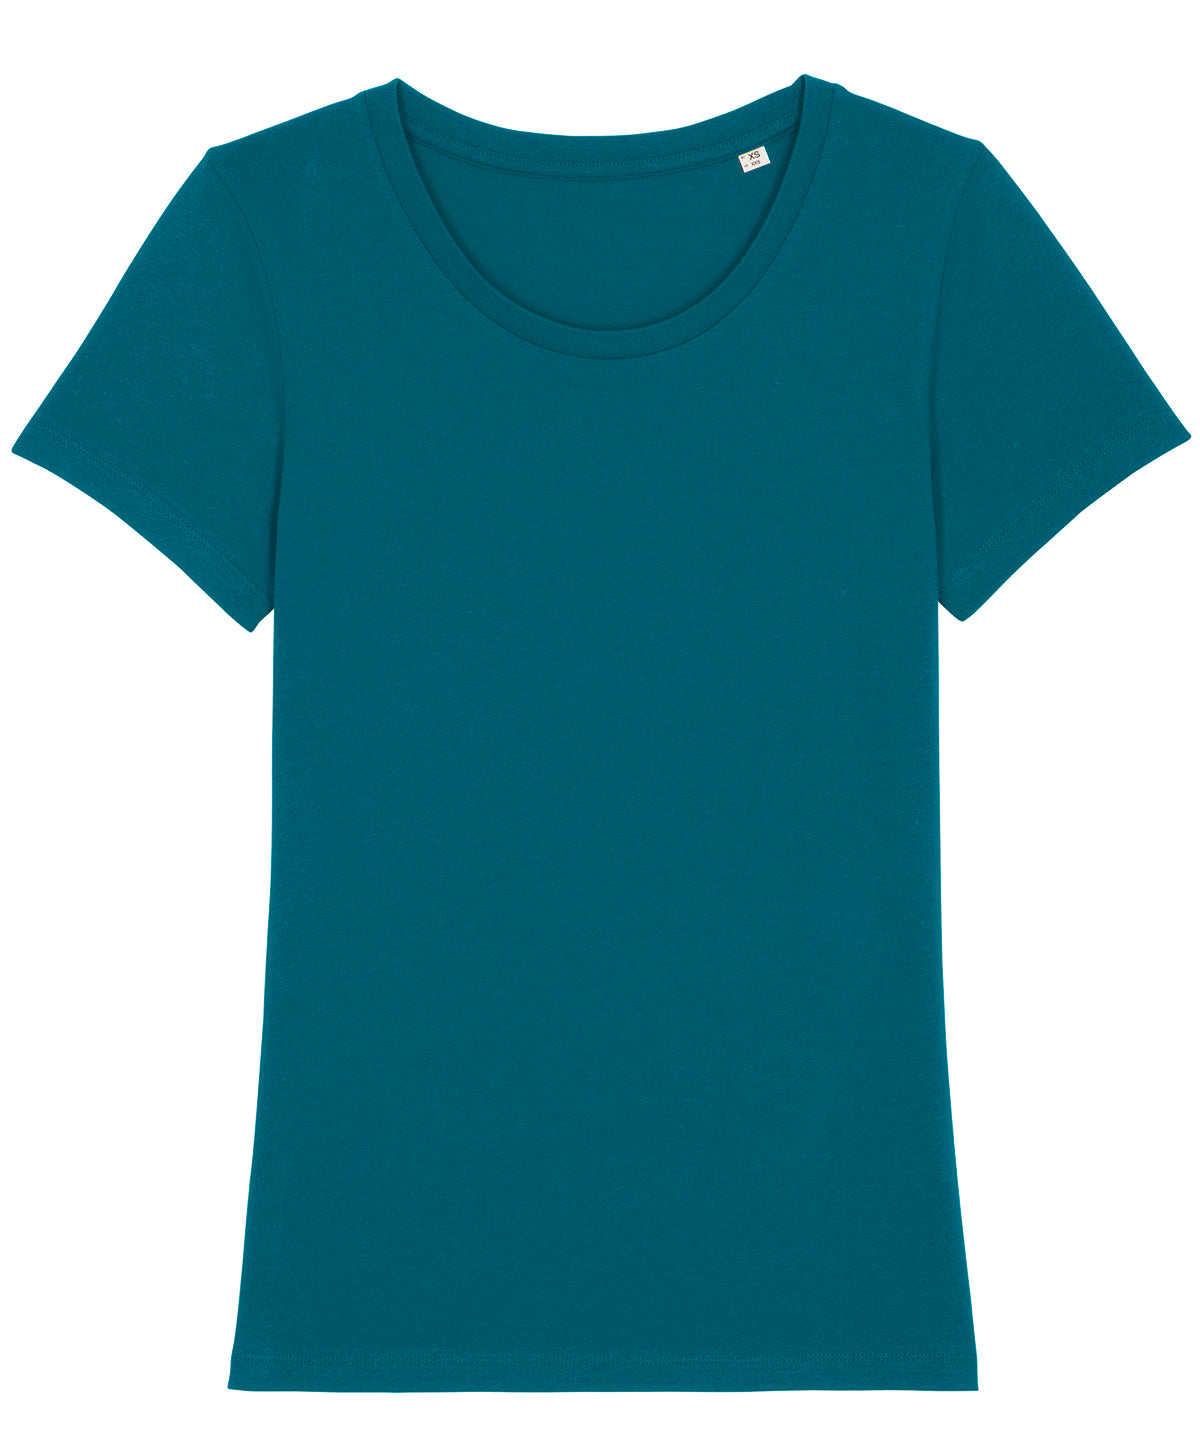 Stanley/Stella Womens Stella Expresser Iconic Fitted T-Shirt  Ocean Depth